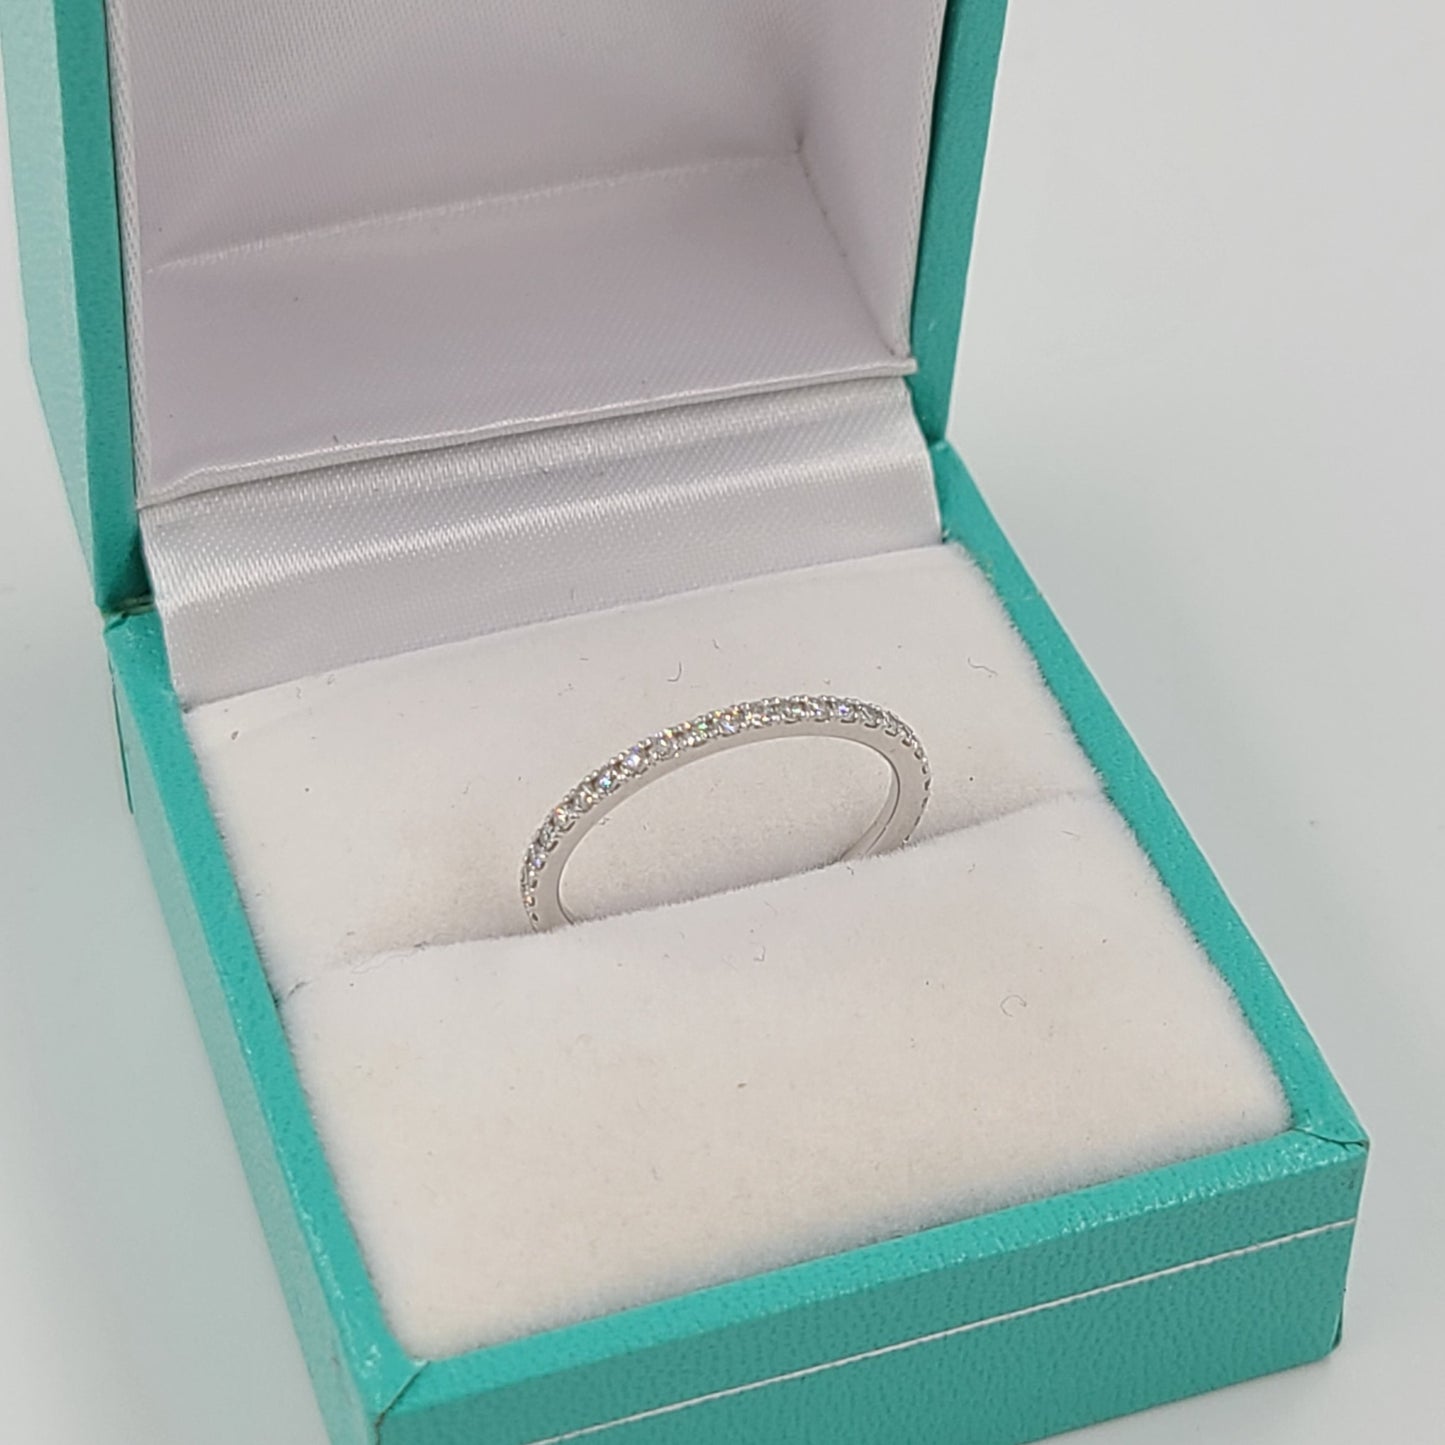 Full Eternity Diamond Wedding Band/Width 1.4mm Wedding Band/Full Eternity Diamond Ring/Diamond Minimalist Ring/Diamond Band / Stackable Ring